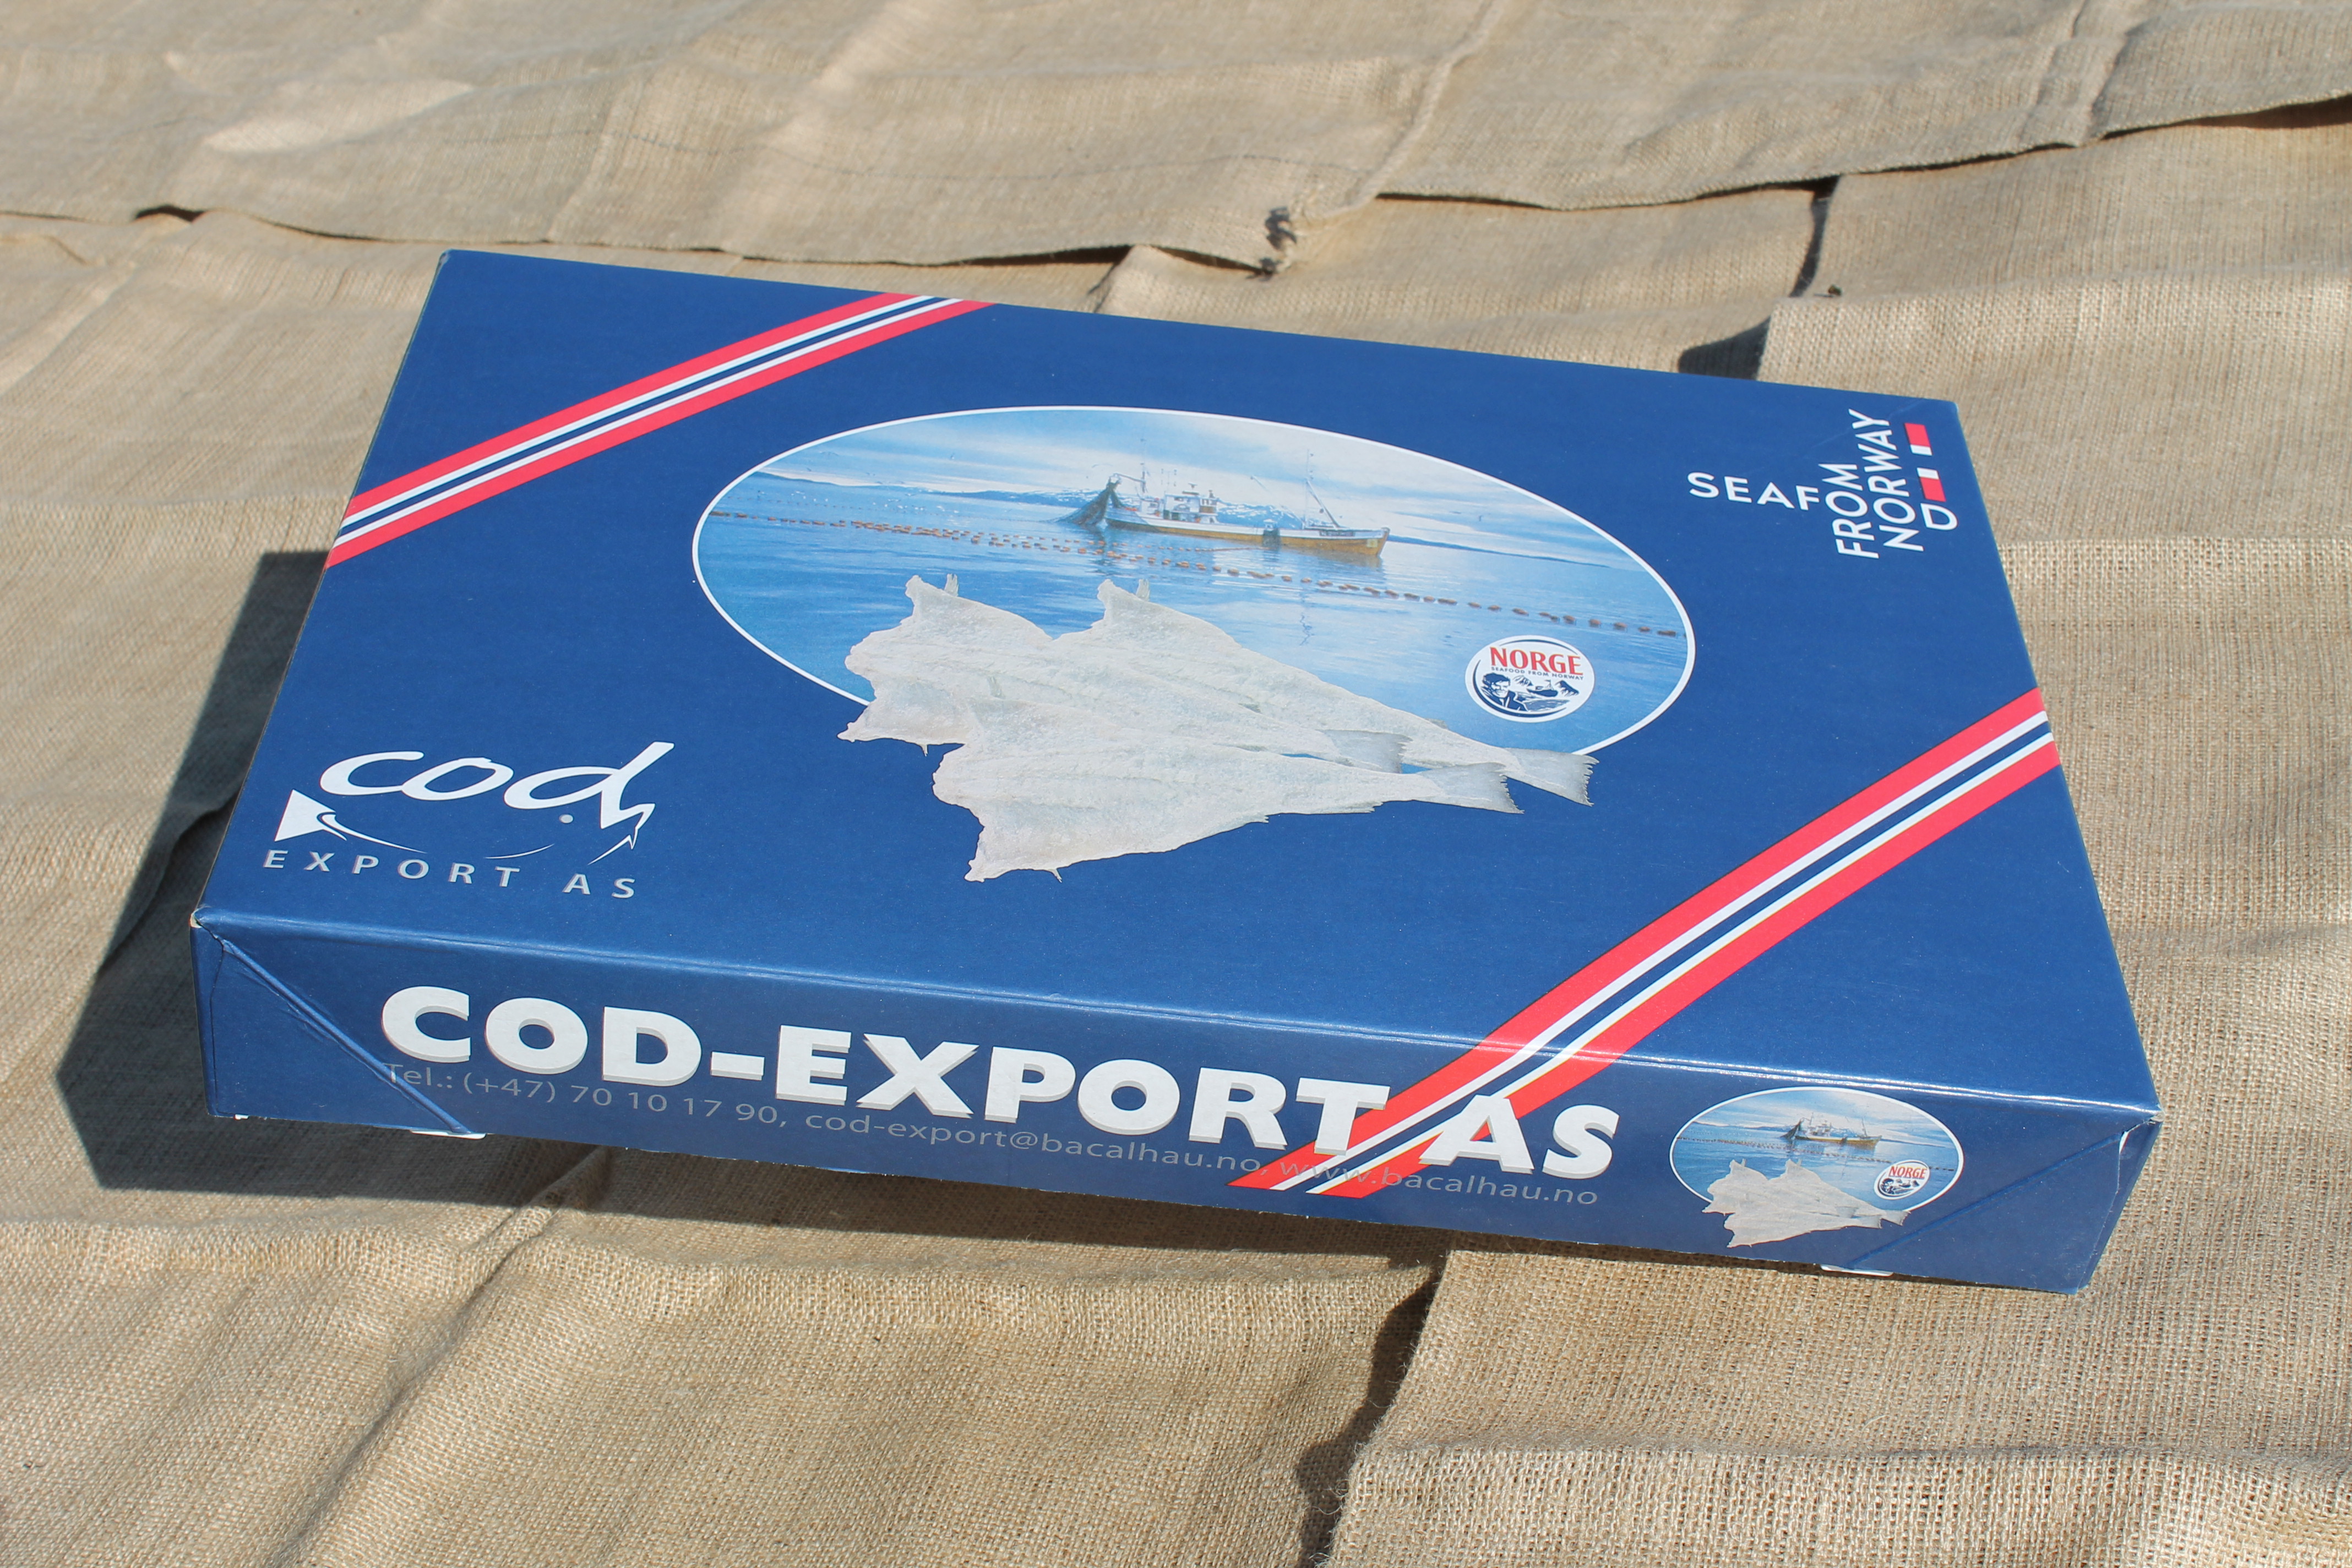 Cod-Export 9 or 10 kgs Carton